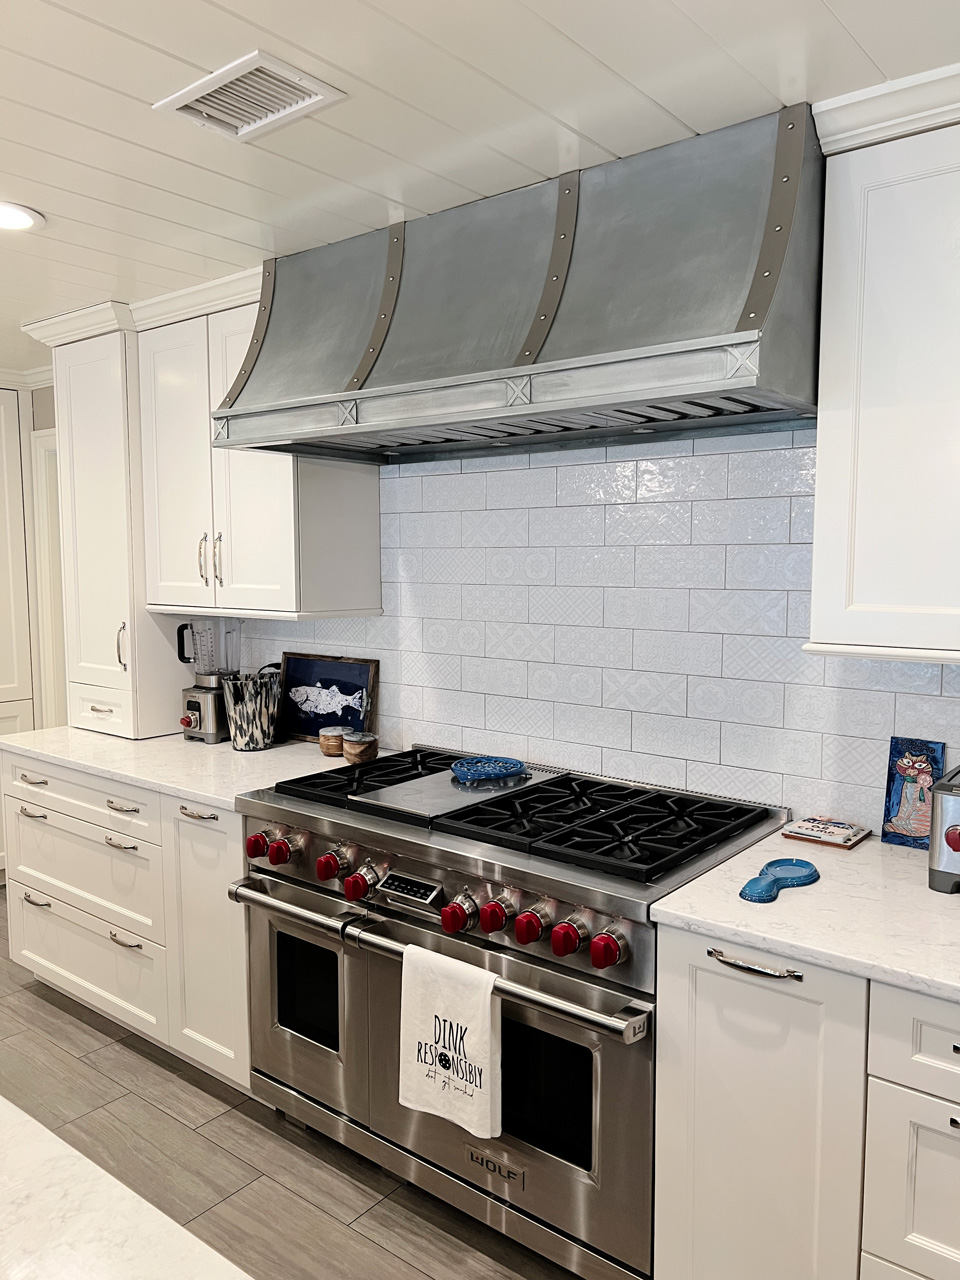 Stainless Steel Decorative Range Hood, Stainless Steel Wolf Range, White Kitchen Countertop, White Kitchen Cabinet